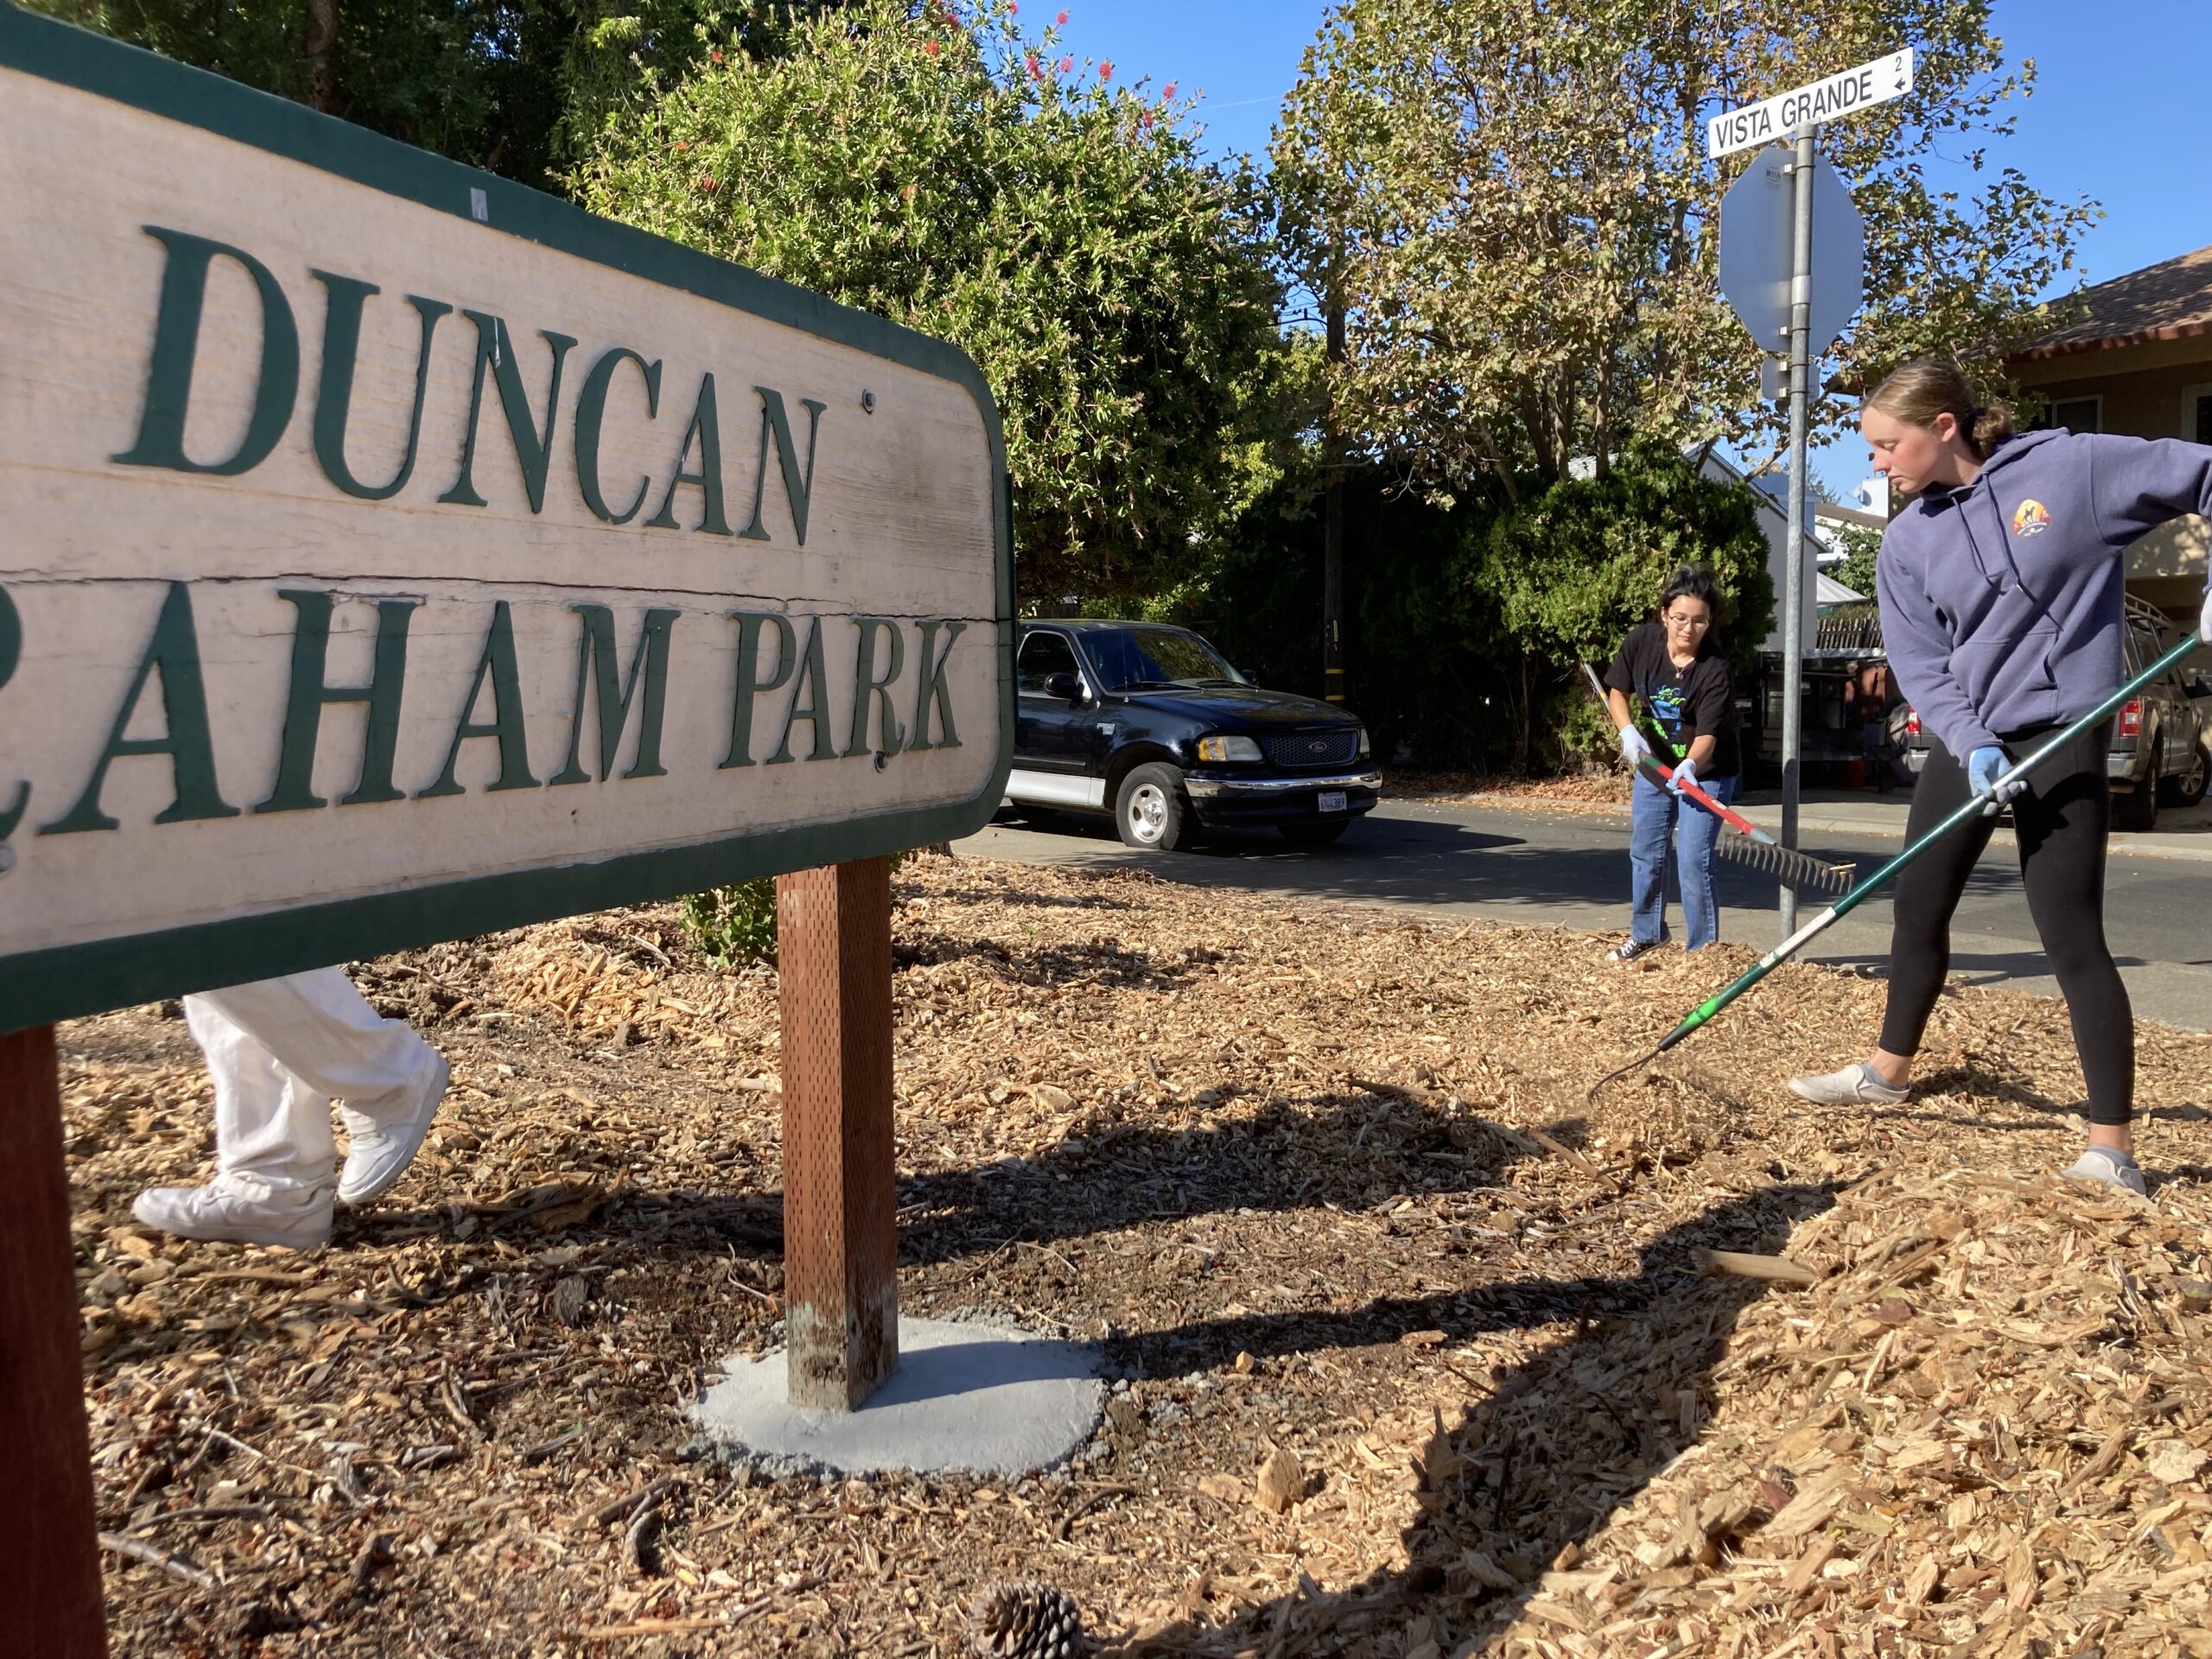 Duncan graham park